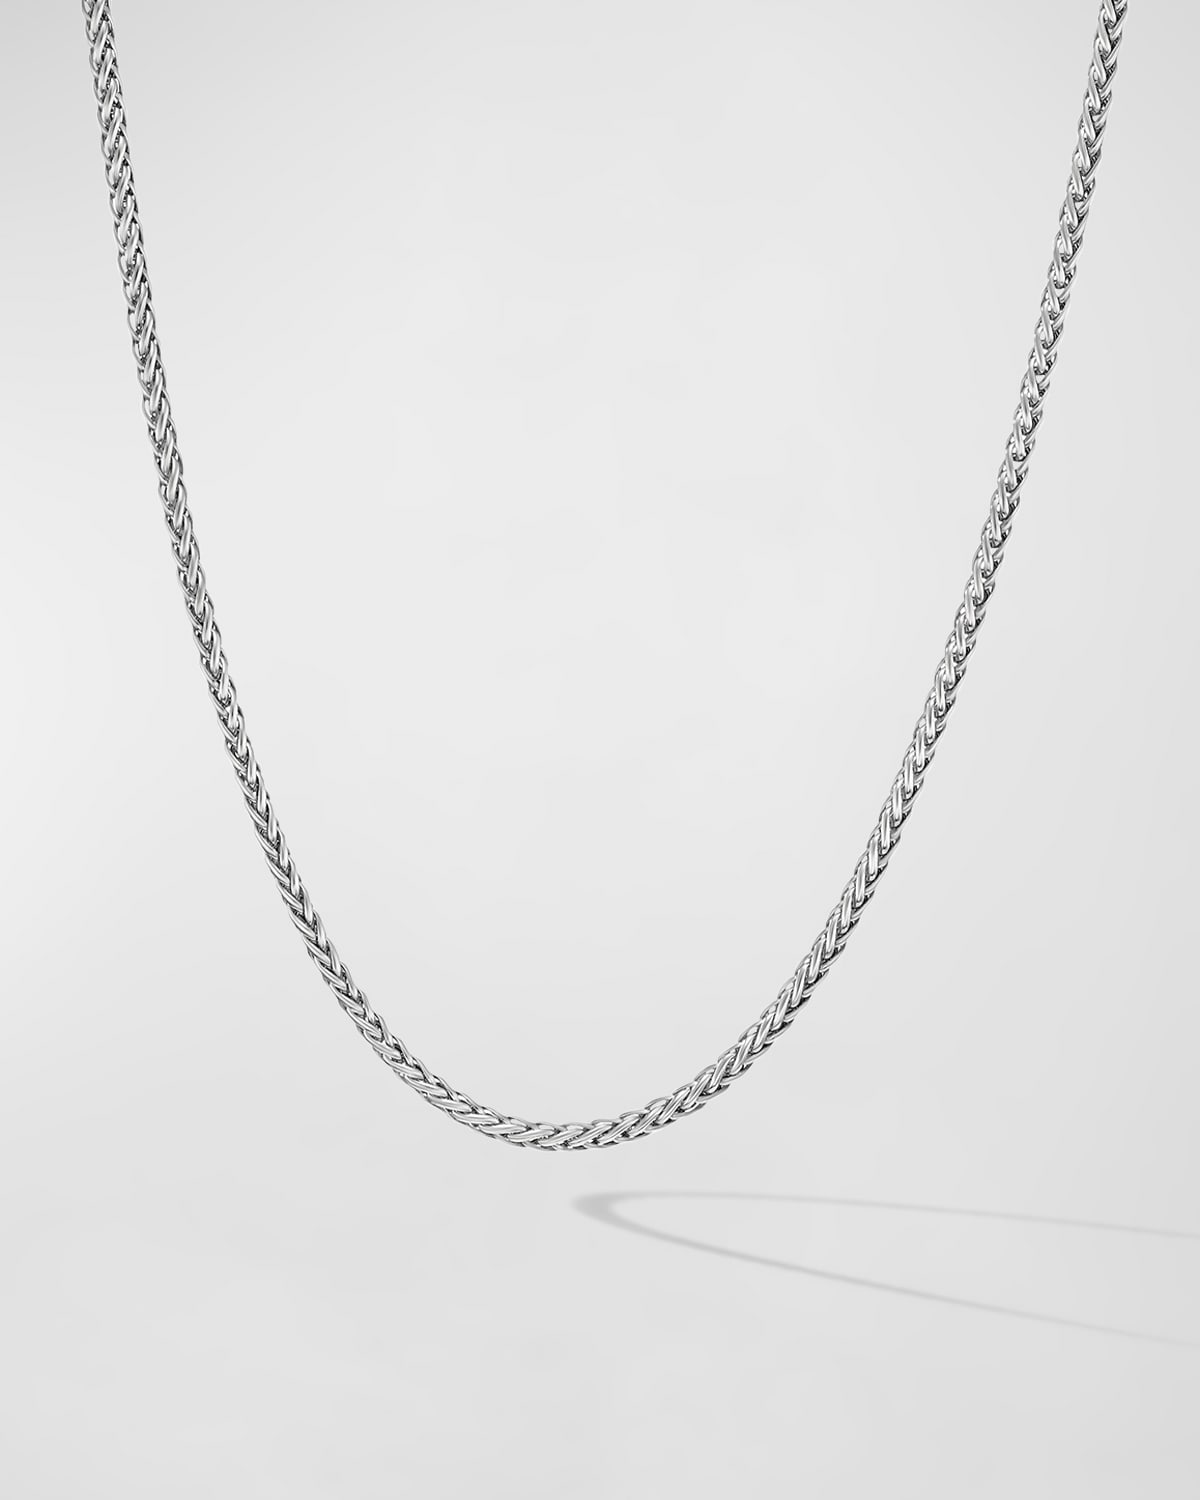 David Yurman Men's Wheat Chain Necklace in Silver, 2.5mm, 18"L